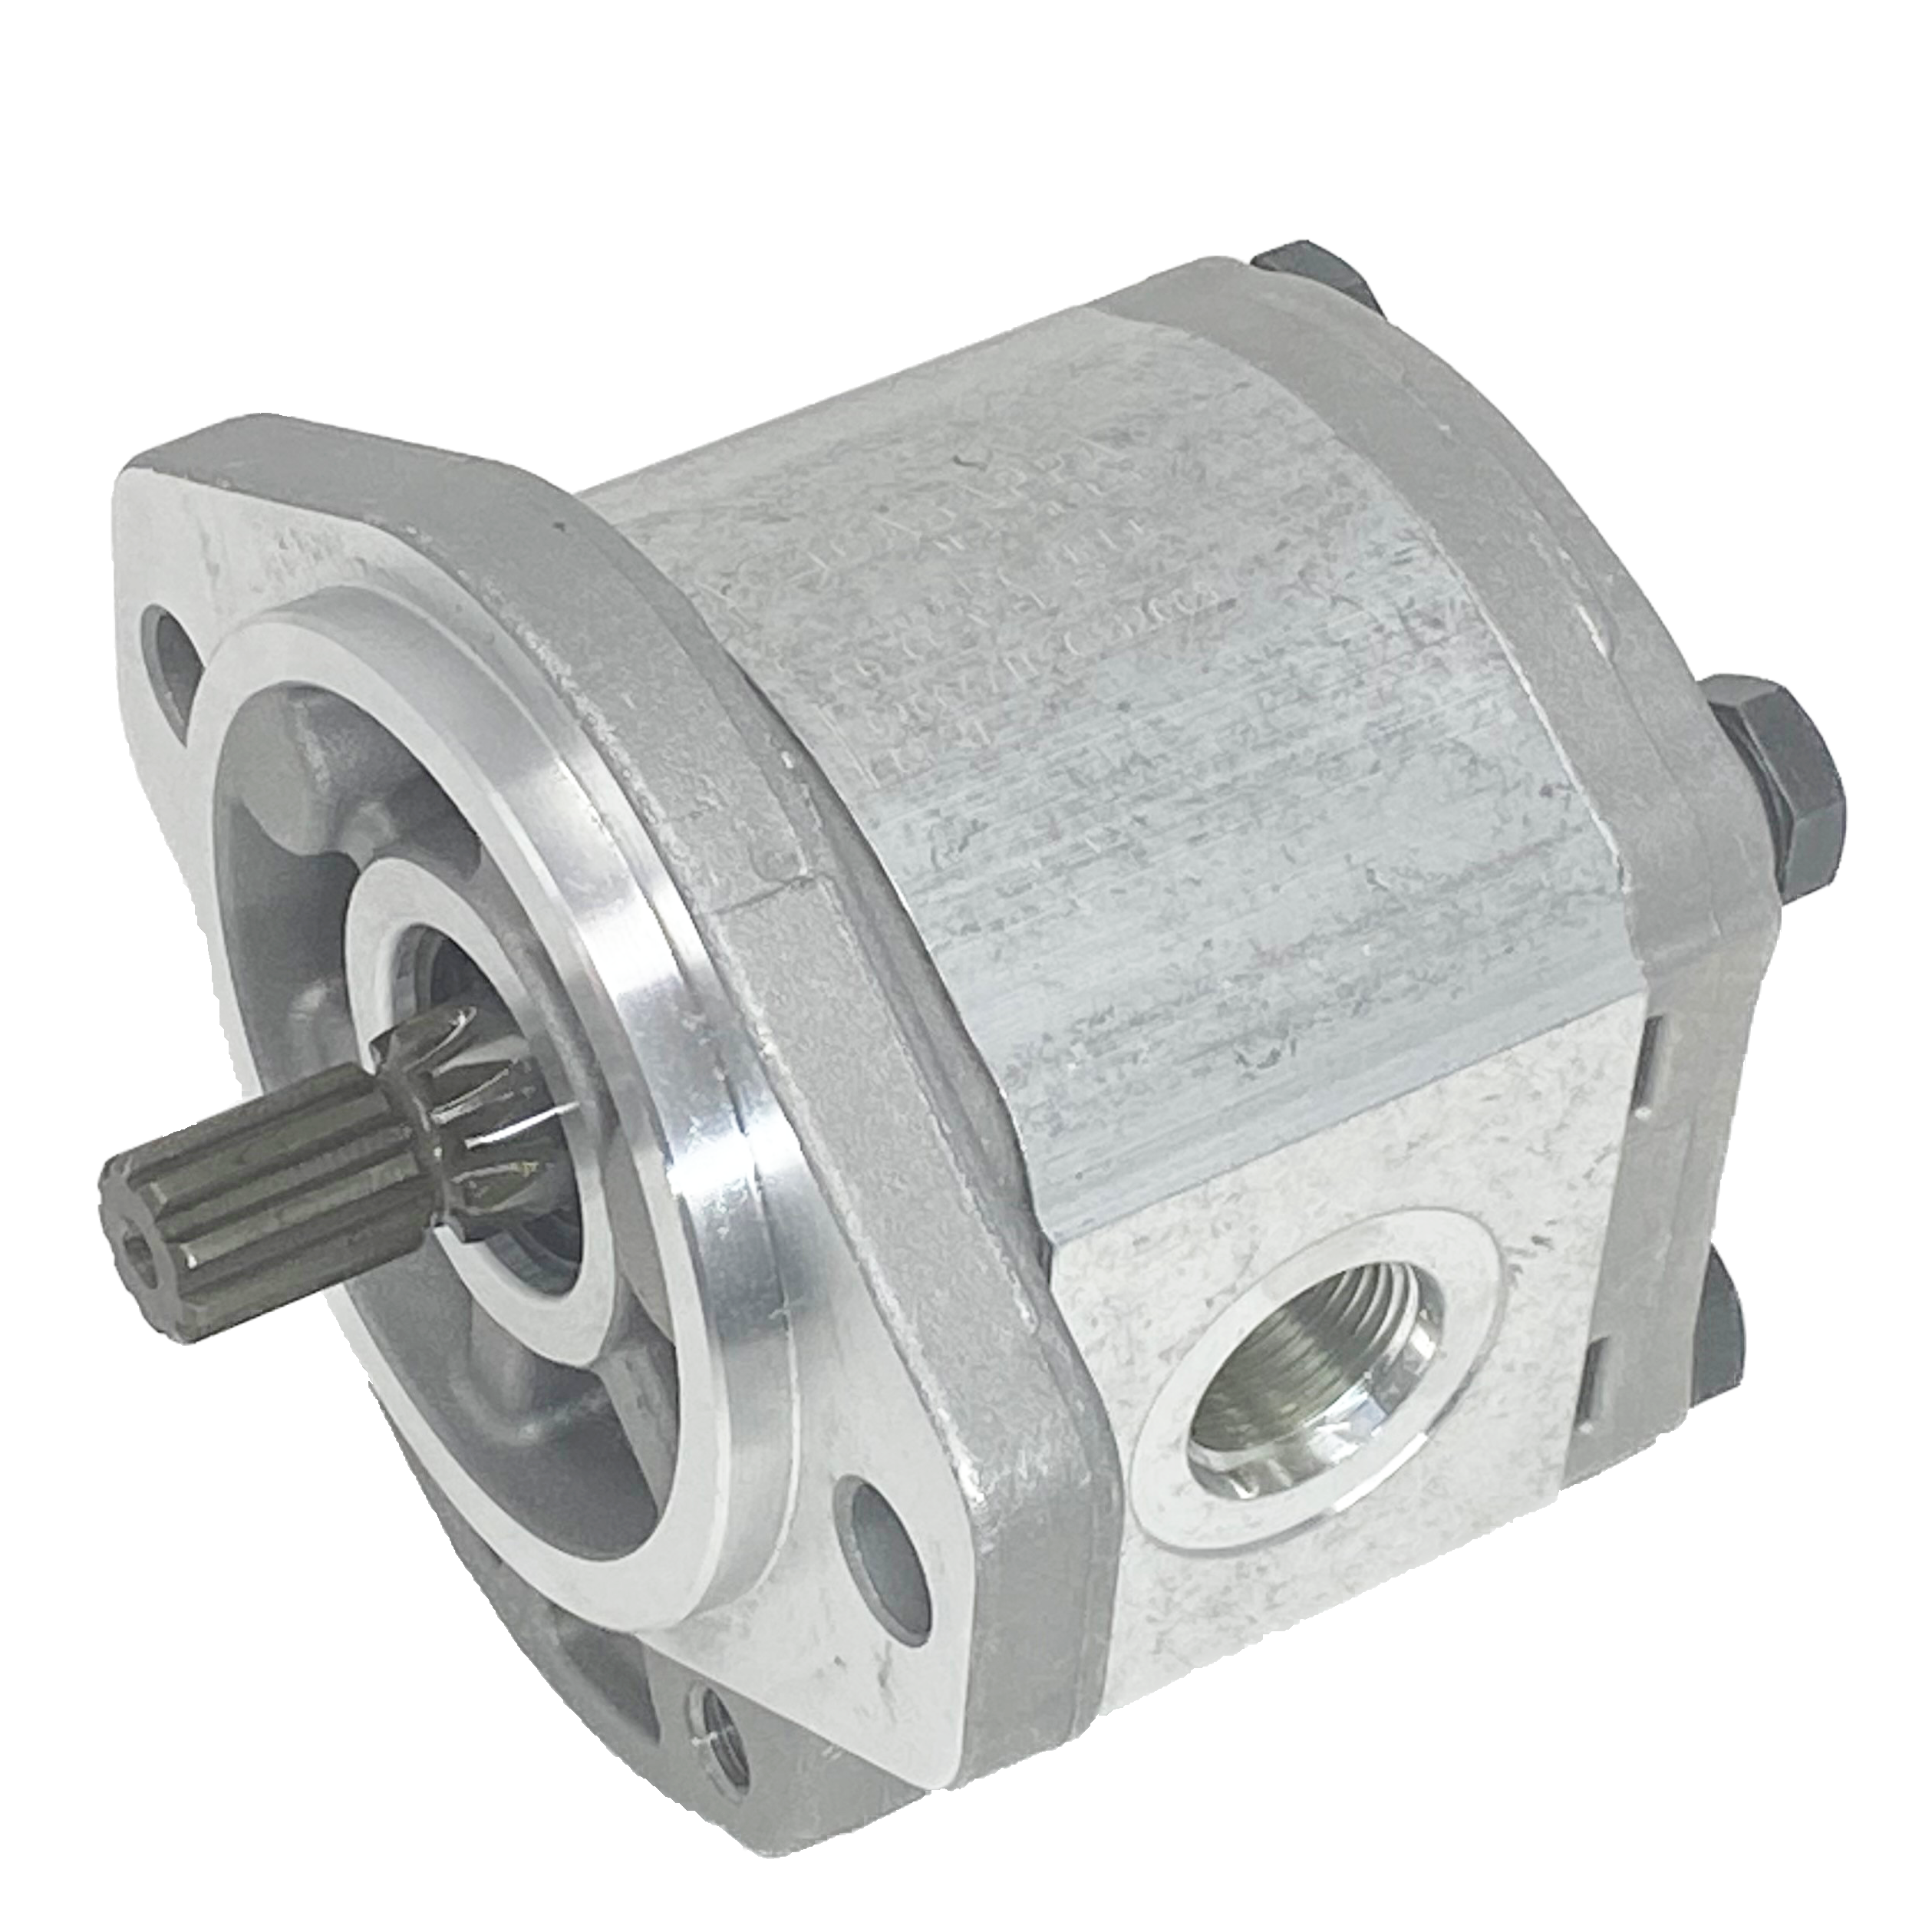 PLM20.14B0-03S1-LOC/OD-N-EL : Casappa Polaris Gear Motor, 14.53cc, 3625psi Rated, 3500RPM, Reversible Interior Drain, 9T 16/32dp Shaft, SAE A 2-Bolt Flange, 0.625 (5/8") #10 SAE Inlet, 0.75 (3/4") #12 SAE Outlet, Aluminum Body & Flange